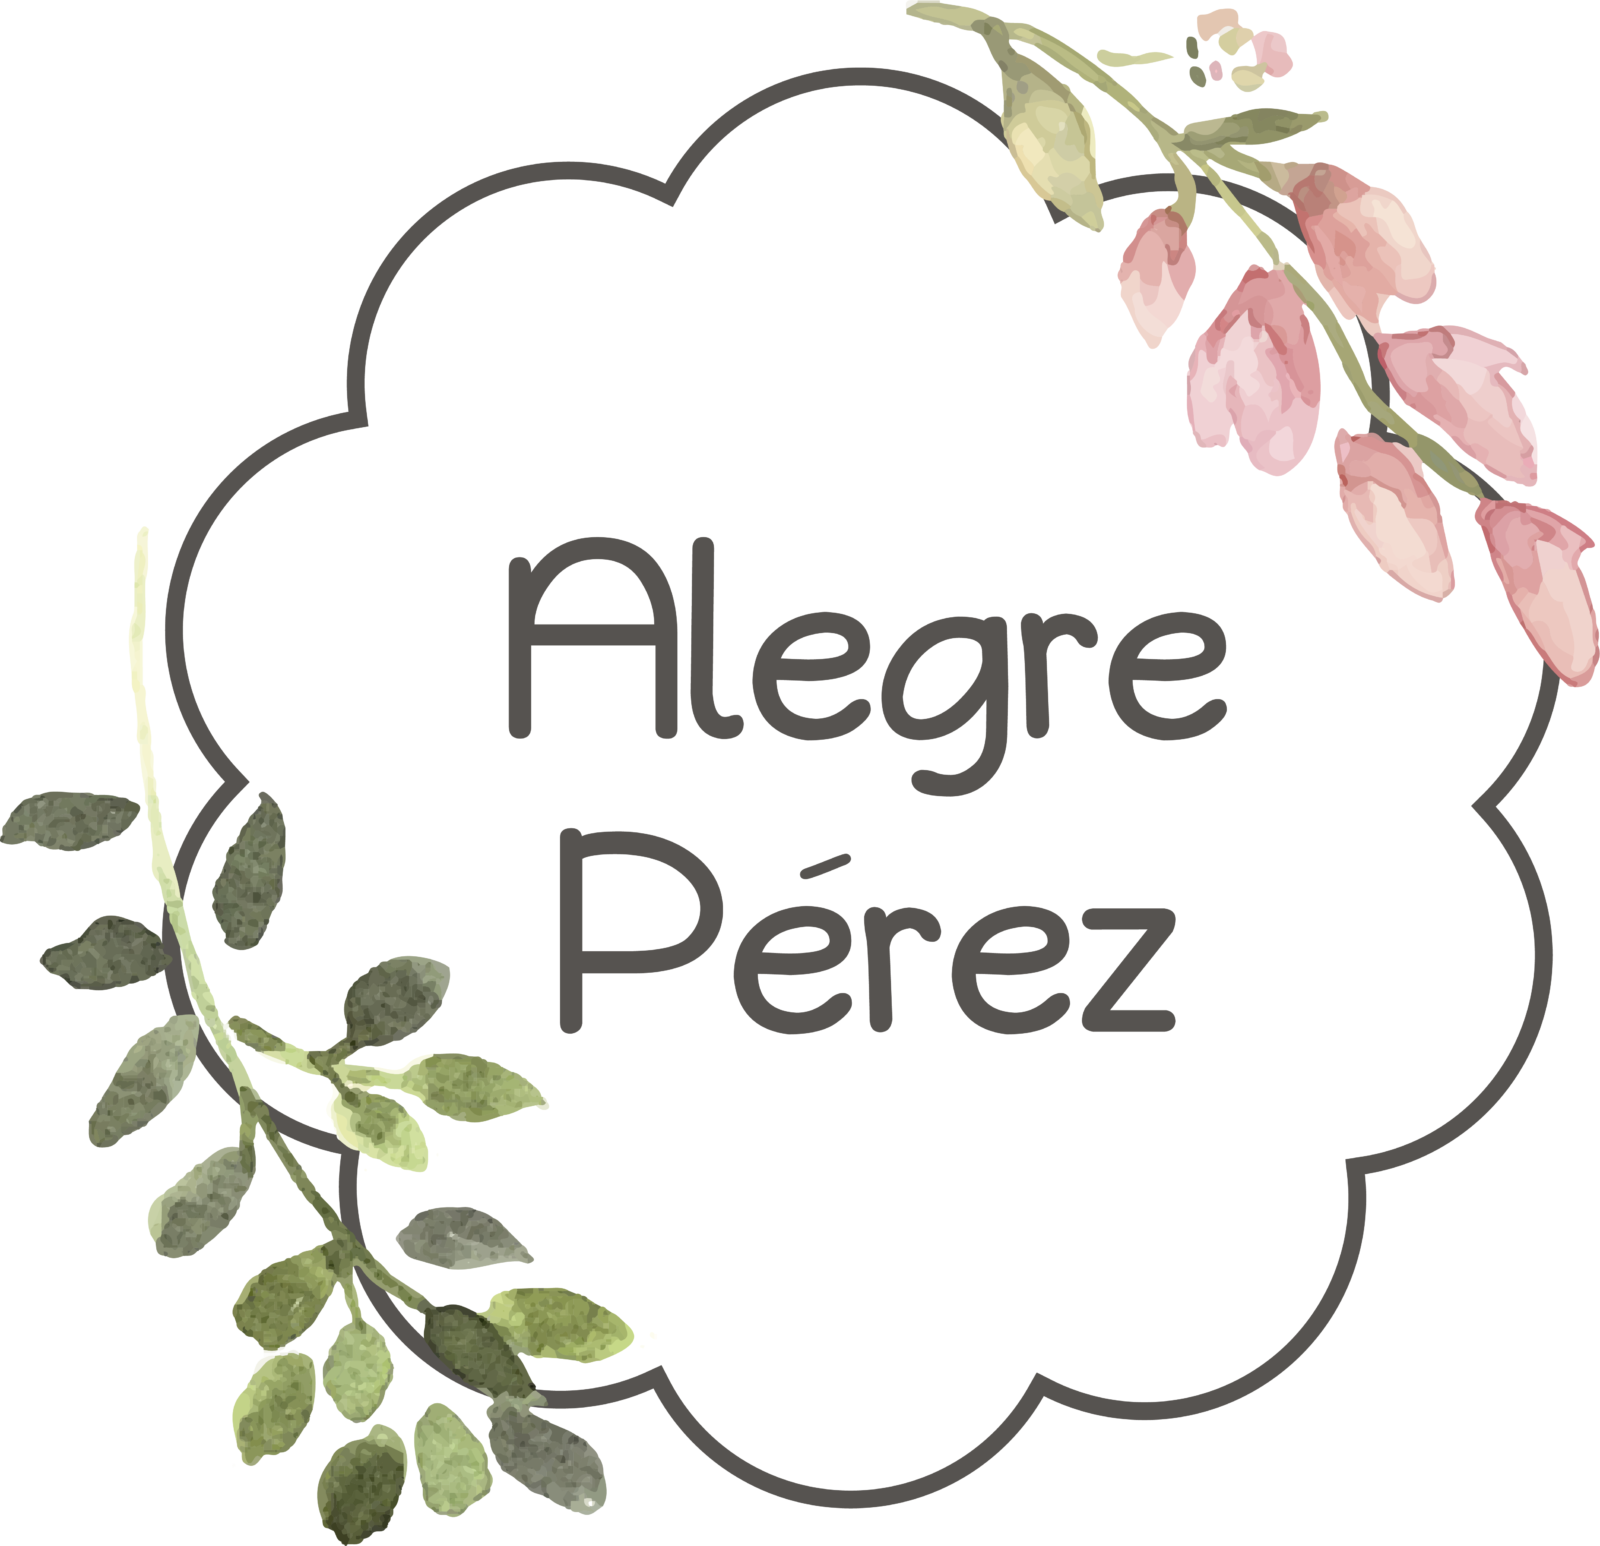 Alegre Pérez